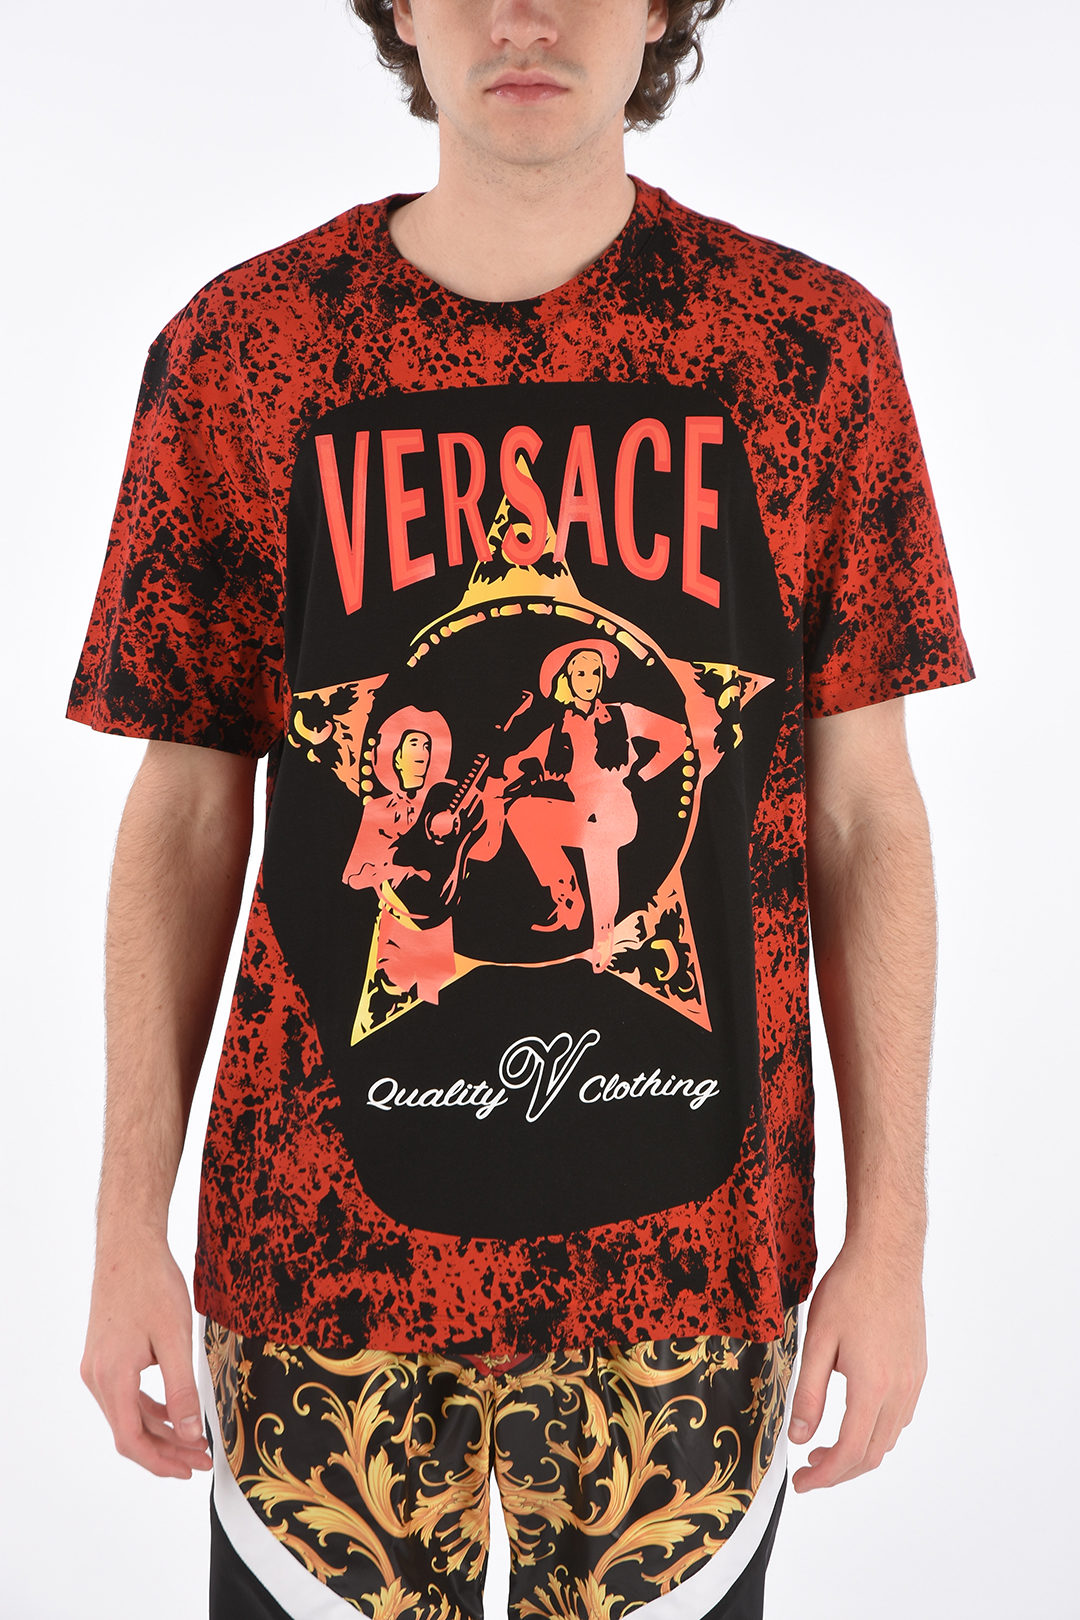 Losjes fluit dubbellaag Versace printed crew-neck Mitchel fit t-shirt men - Glamood Outlet